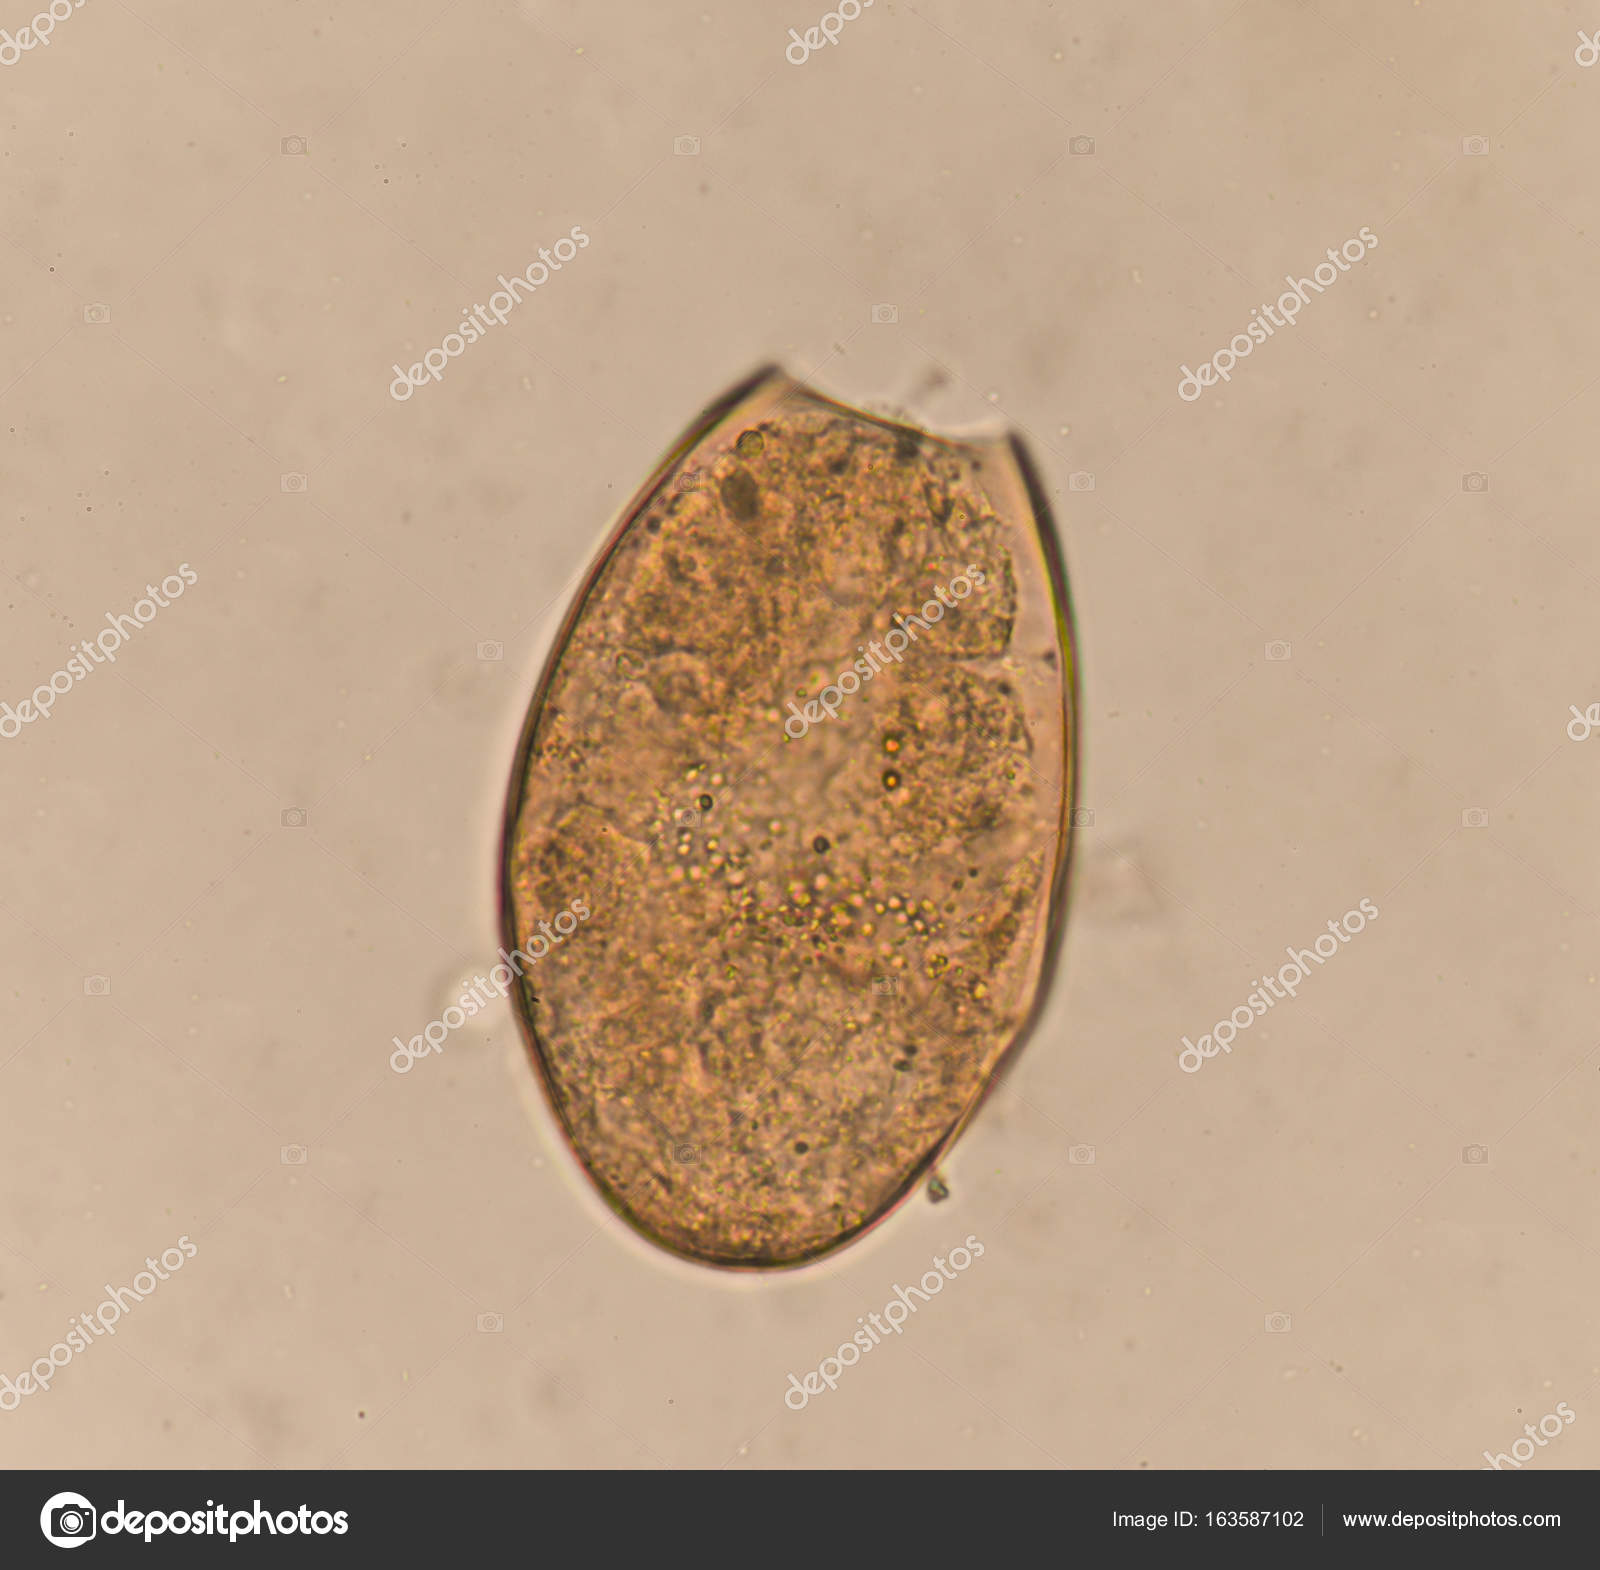 Egg parasite in stool human — Stock Photo © toeytoey #163587102